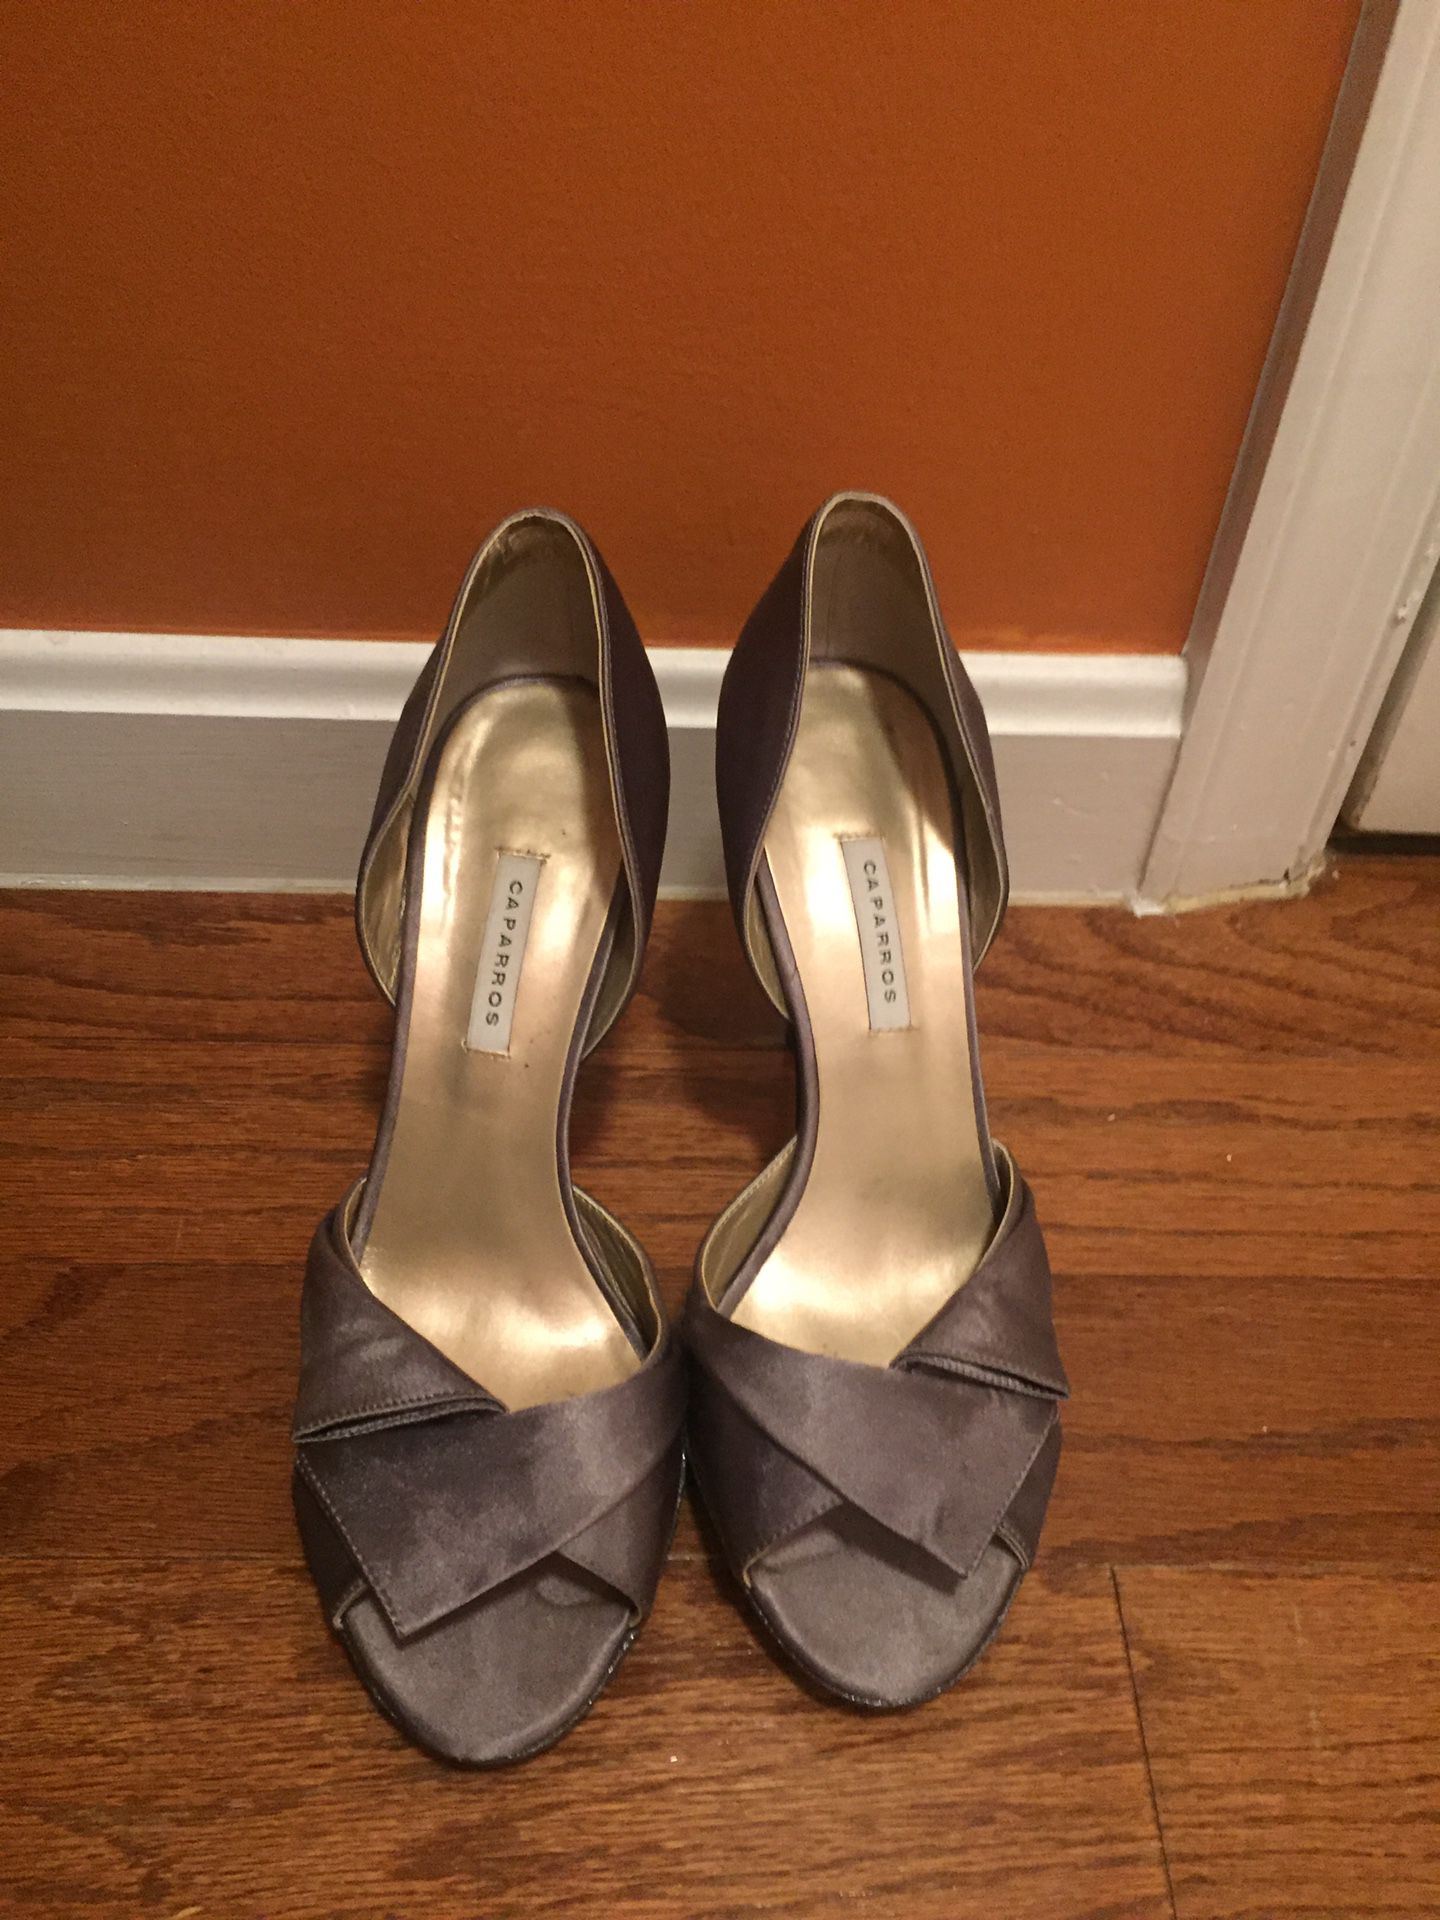 Wedding shoes 8 1/2 - heels 4”